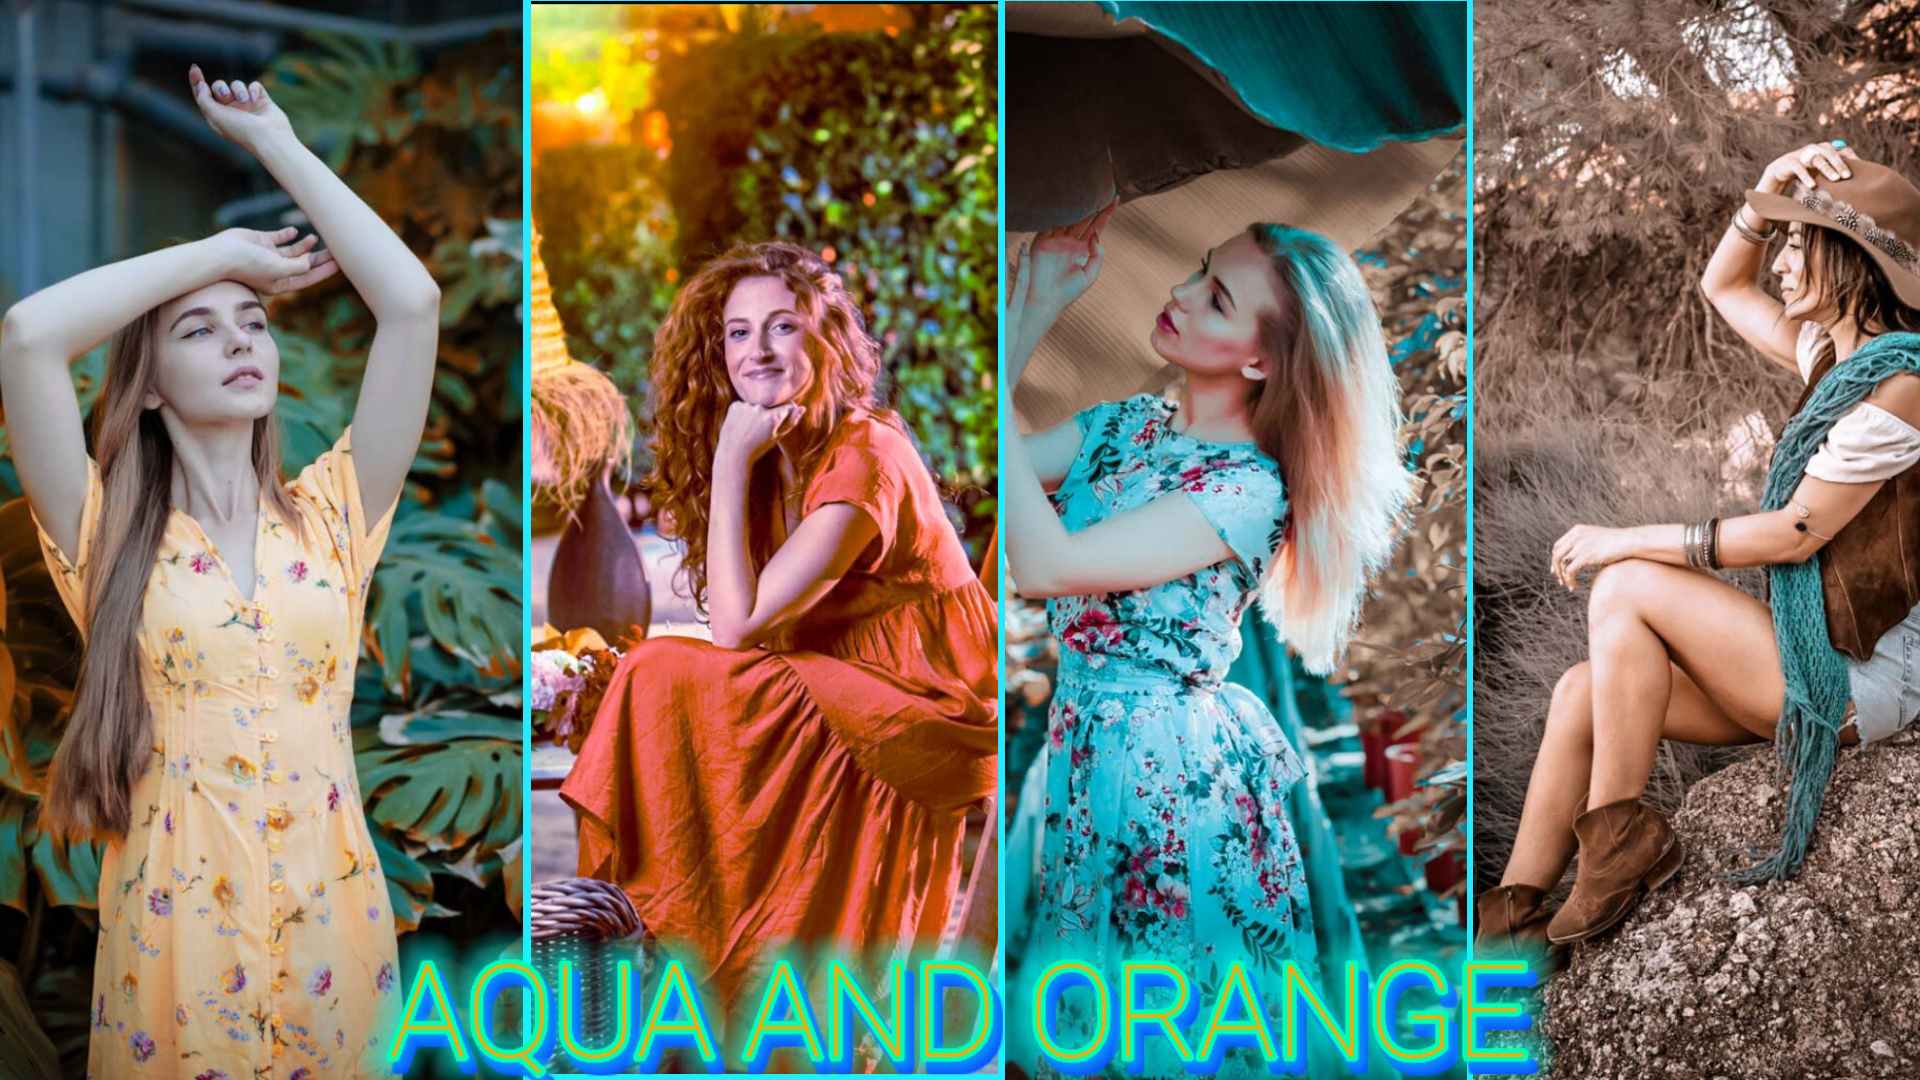 Aqua and Orange Lightroom preset download